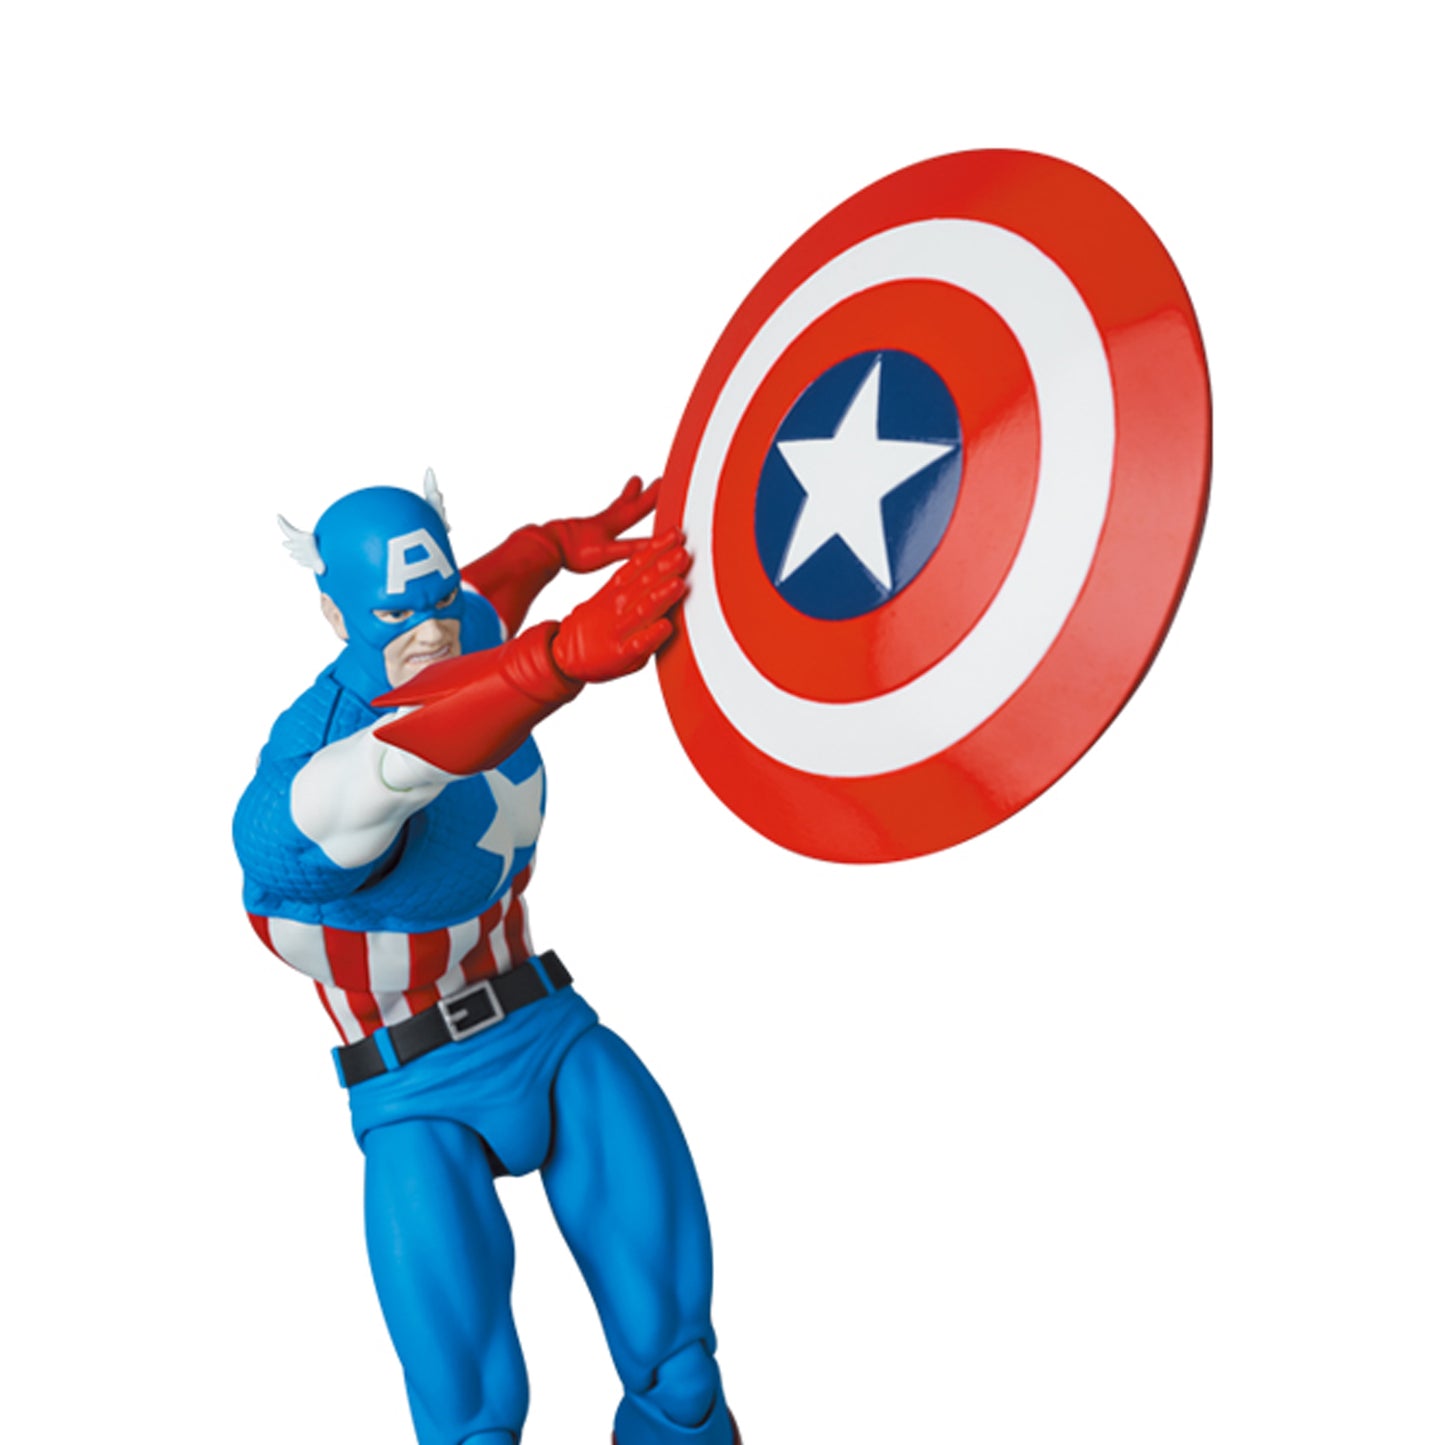 MAFEX Captain America (Classic)